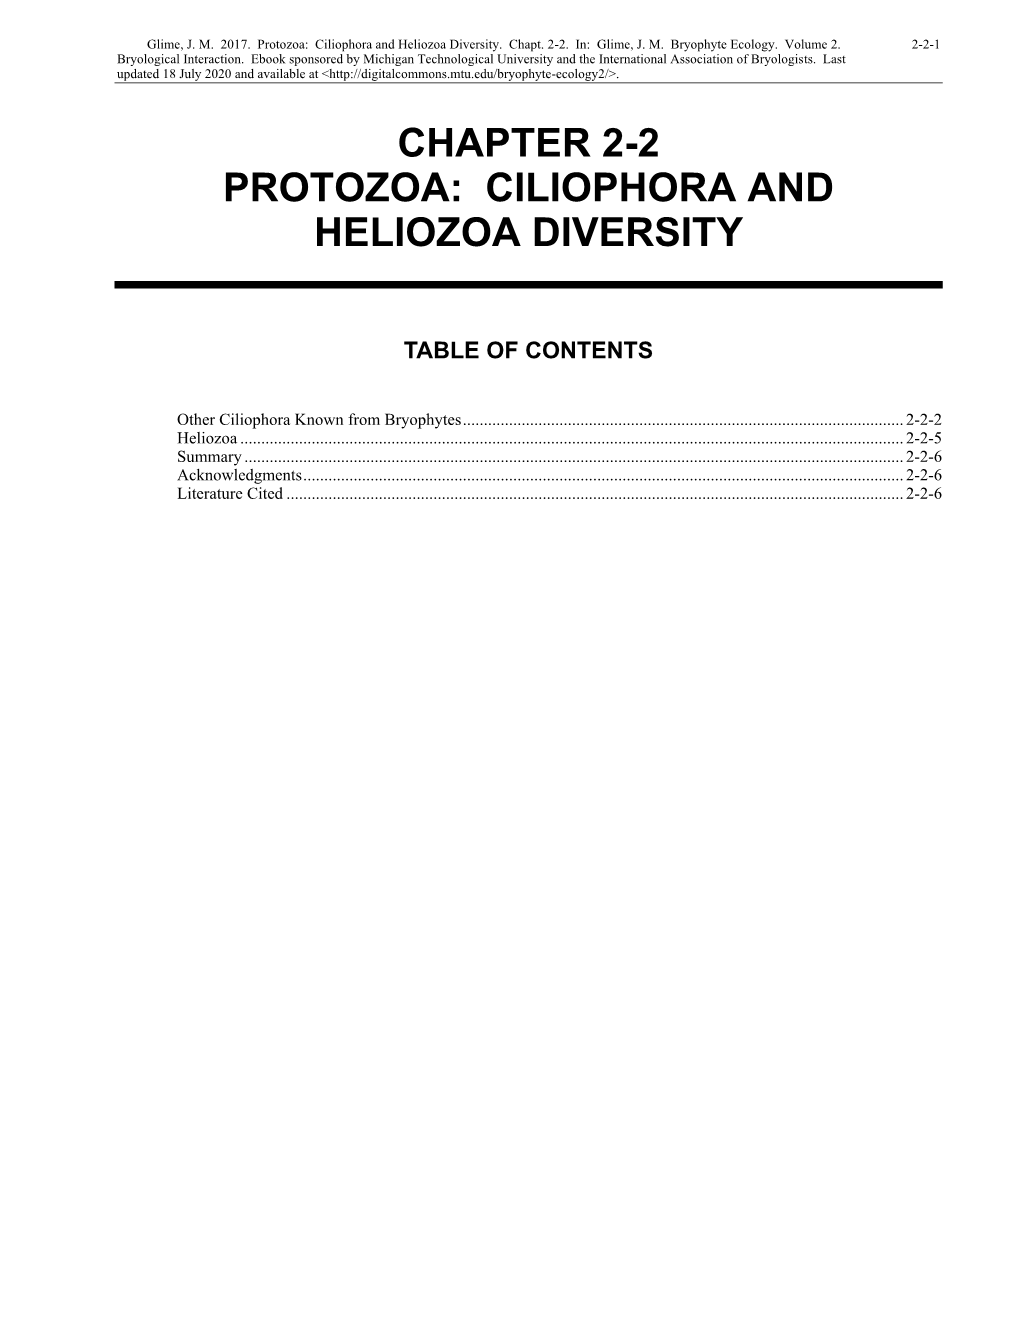 Volume 2, Chapter 2-2 Protozoa: Ciliophora and Heliozoa Diversity